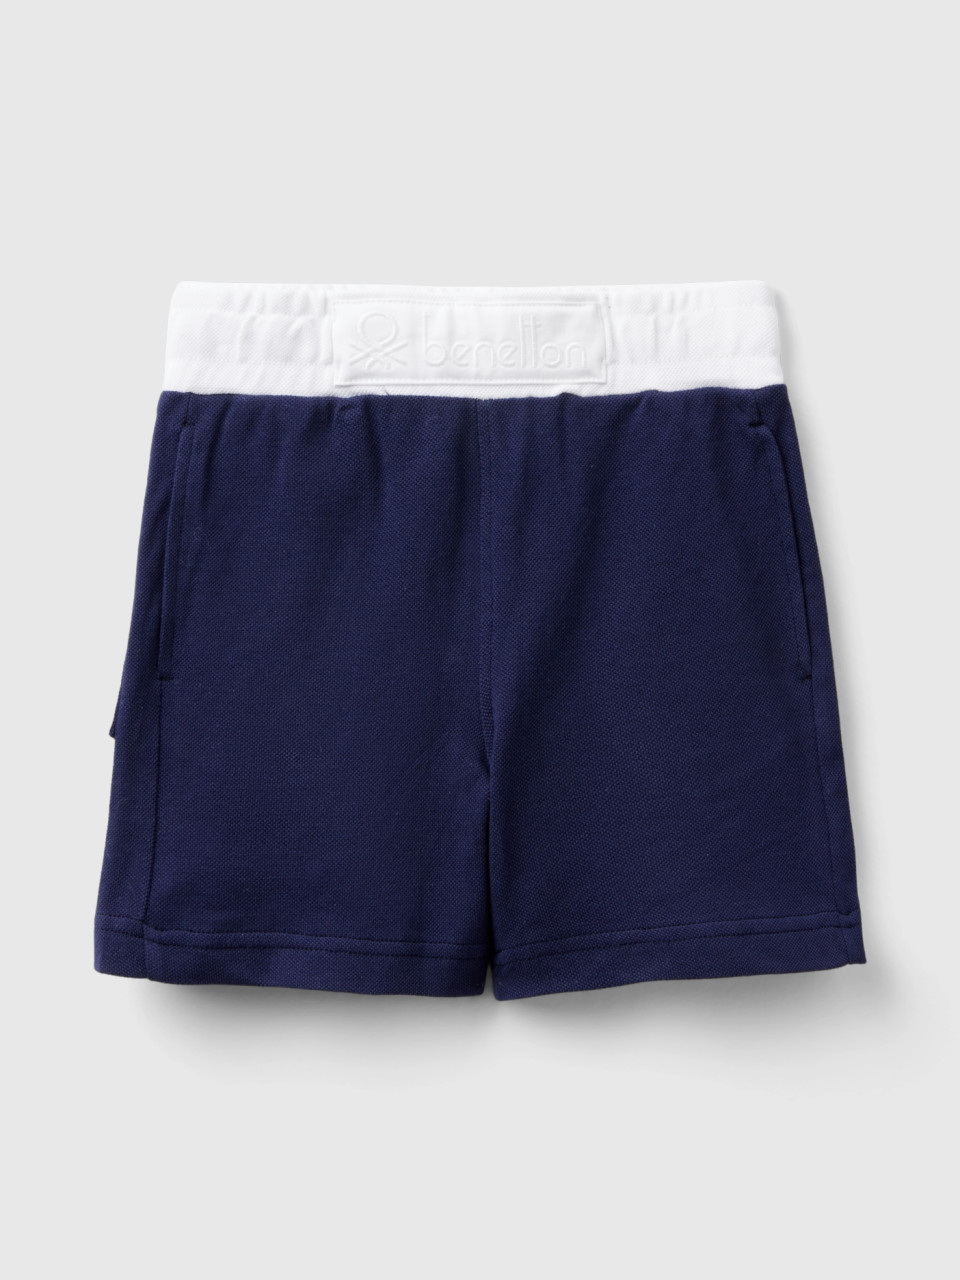 Benetton, Shorts With Drawstring, Dark Blue, Kids